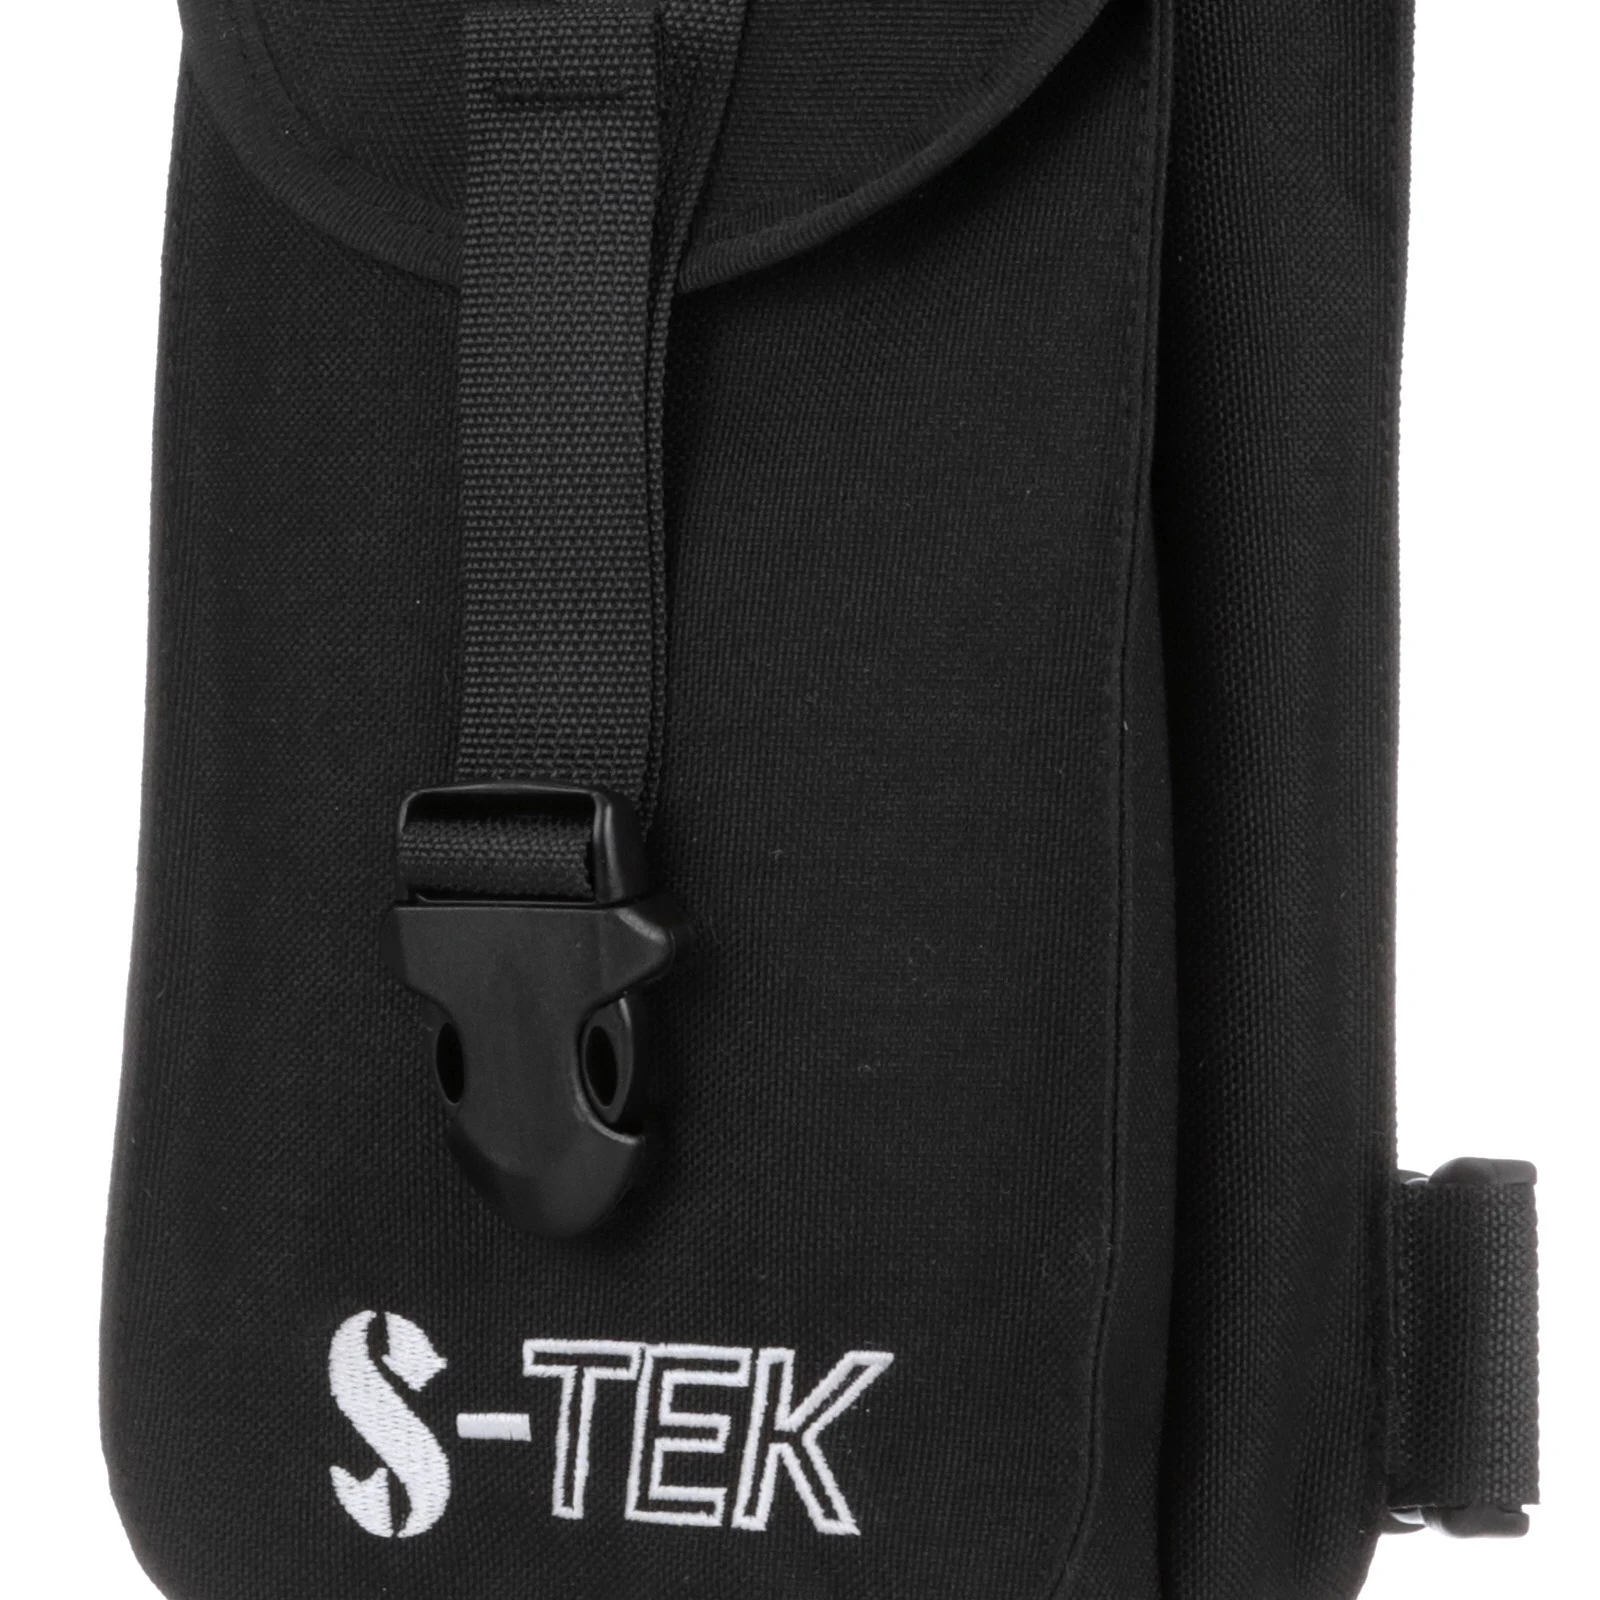 S-Tek Expedition Thigh Pocket - Detail 1.